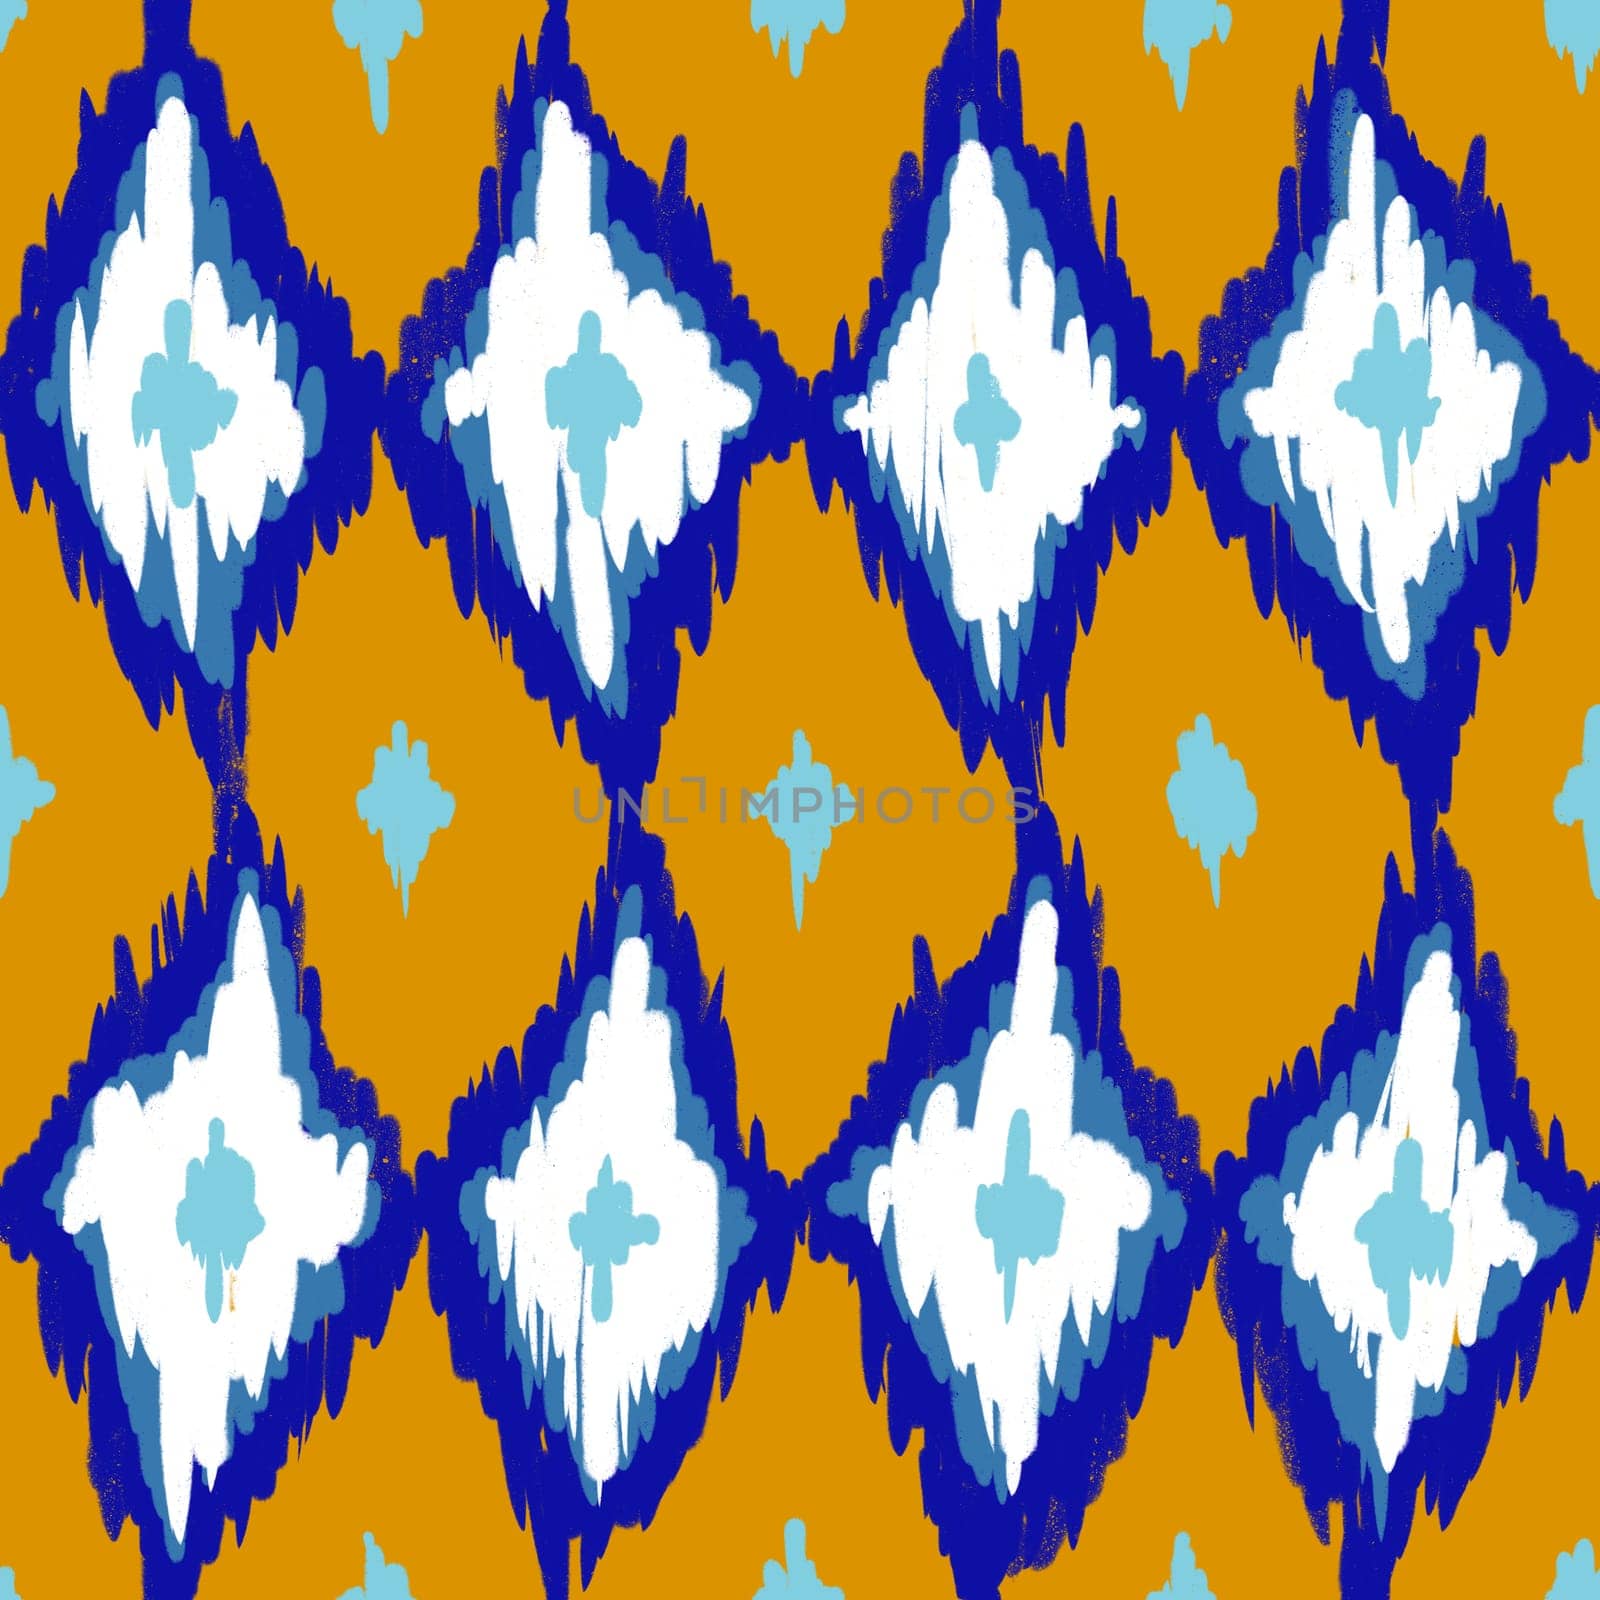 Hand drawn seamless pattern with ikat ethnic traditional indonesian fabric print. Blue indigo yellow mustard abstract geometric stripes lines design mid century modern splash stroke vibrant print with rhombus diamond shapes. by Lagmar